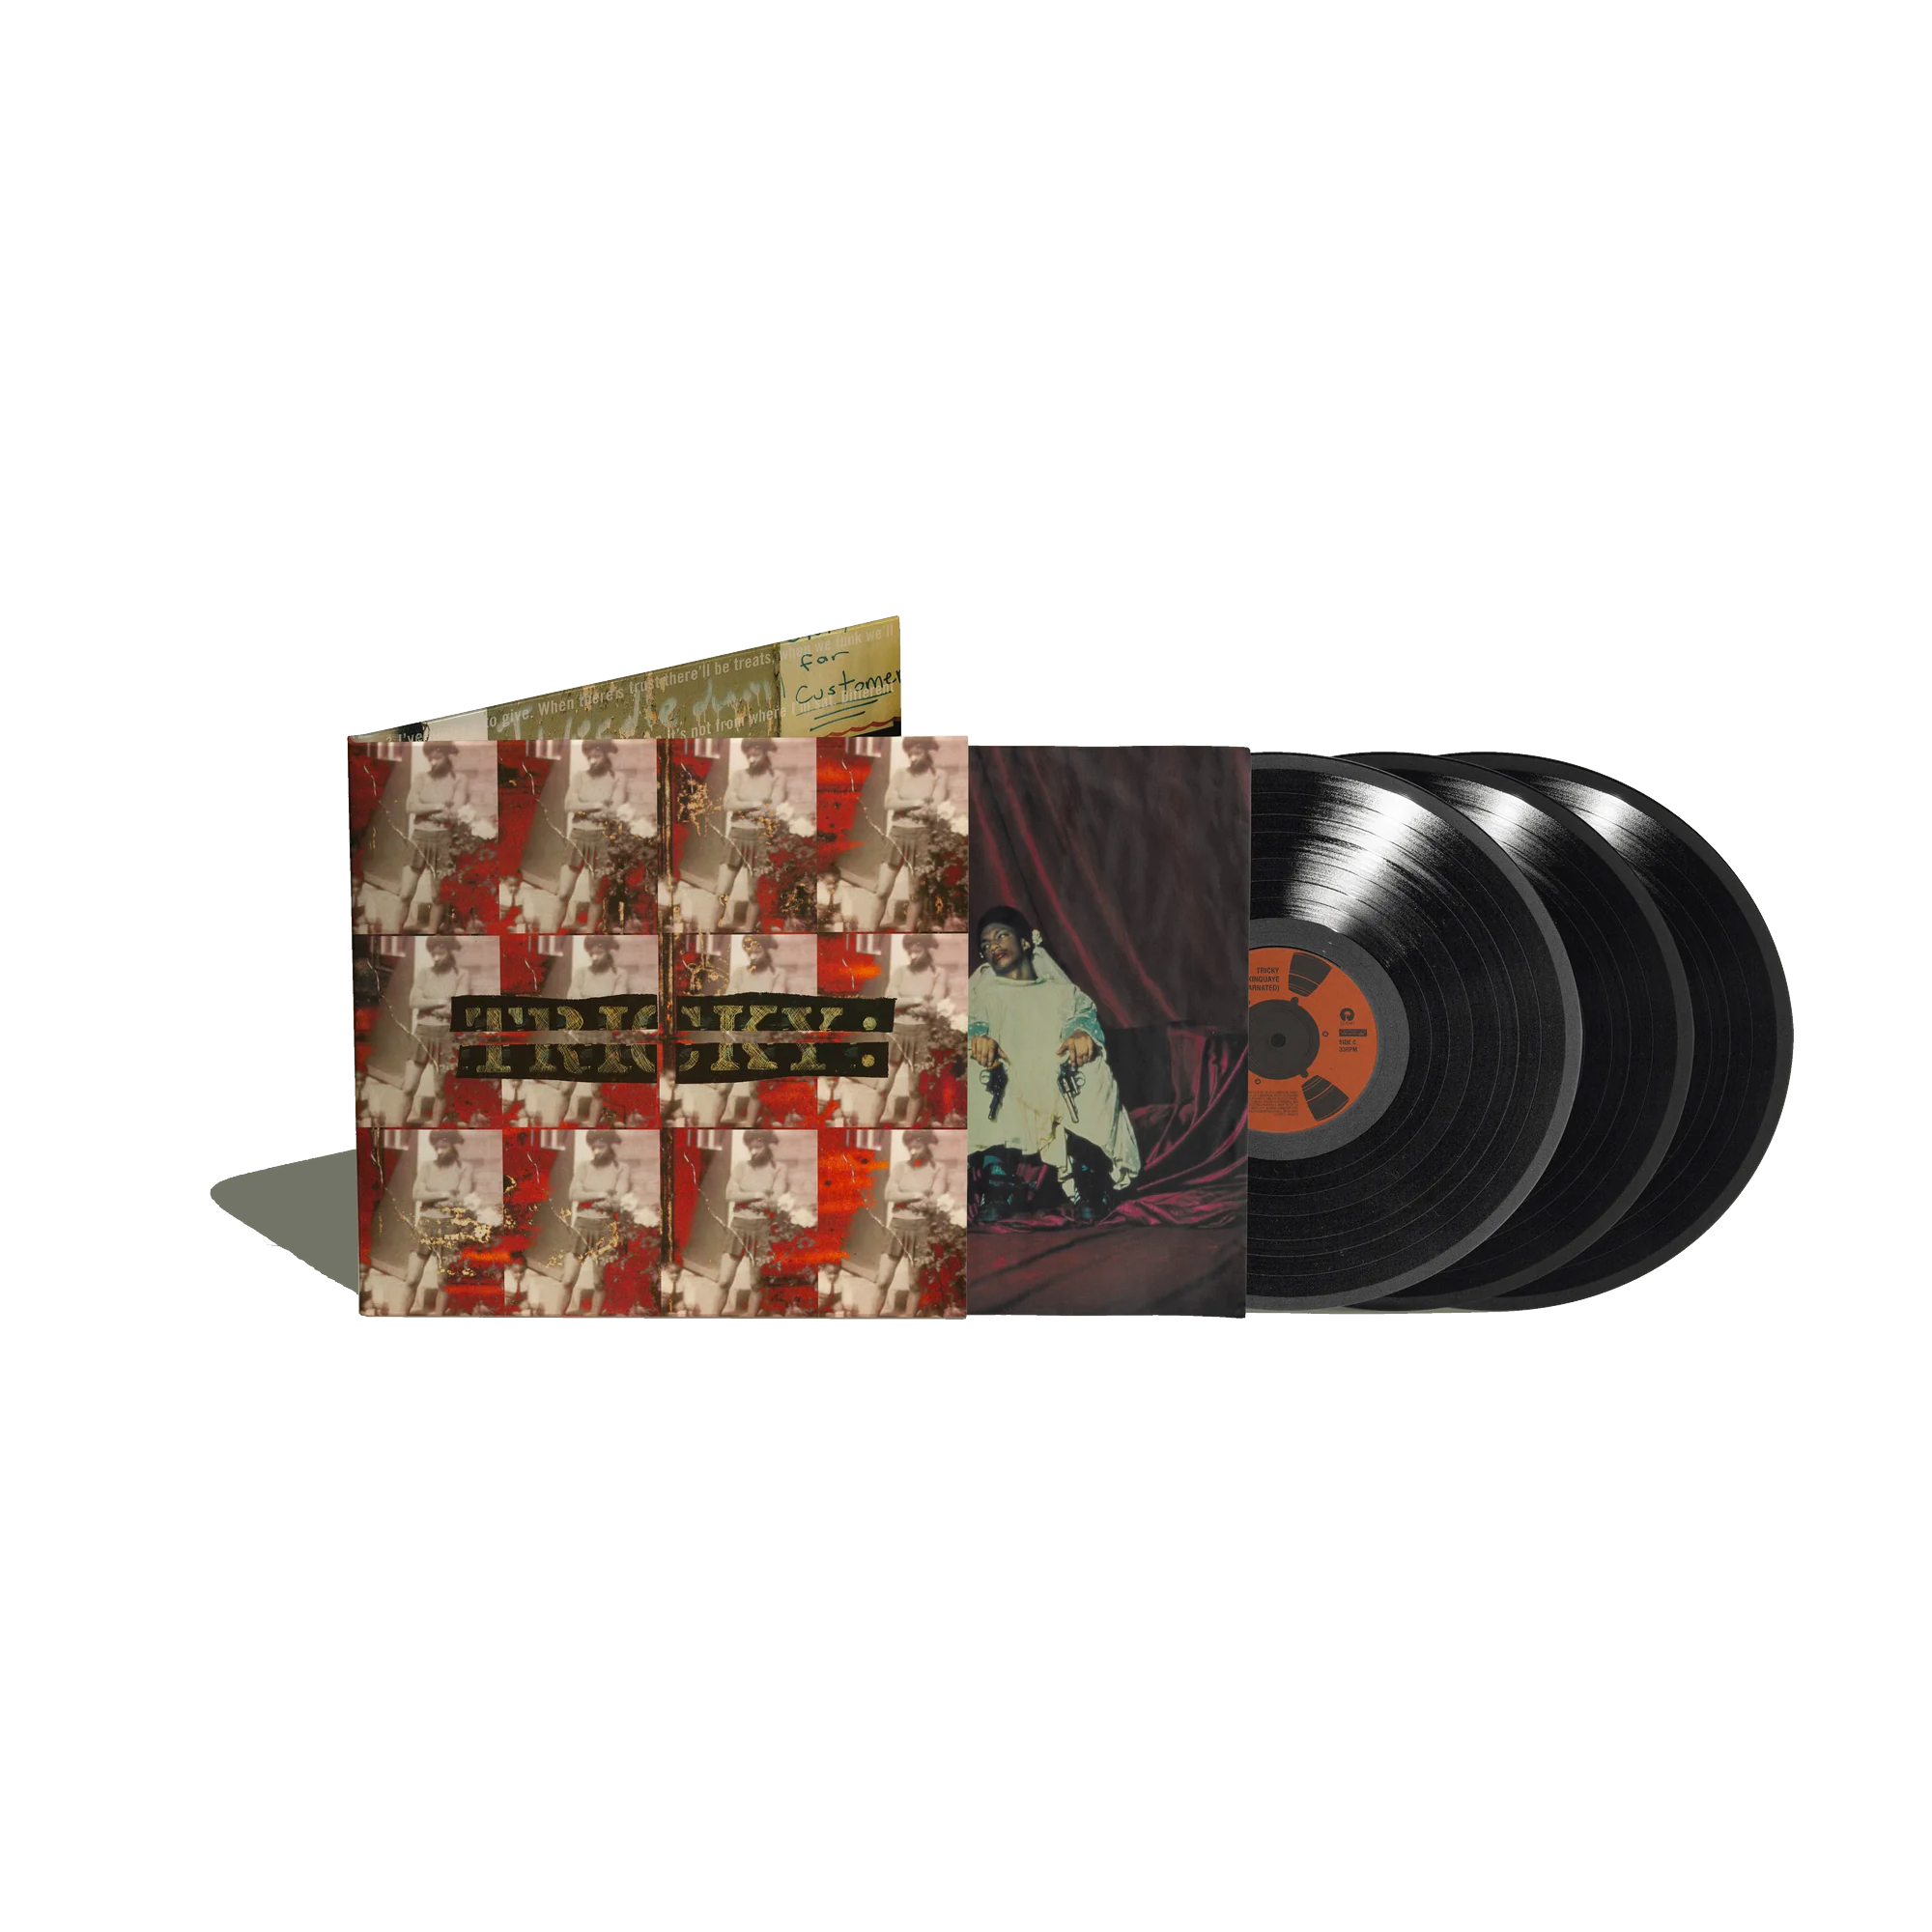 Tricky - Maxinquaye (Reincarnated): Super Deluxe Vinyl 3LP